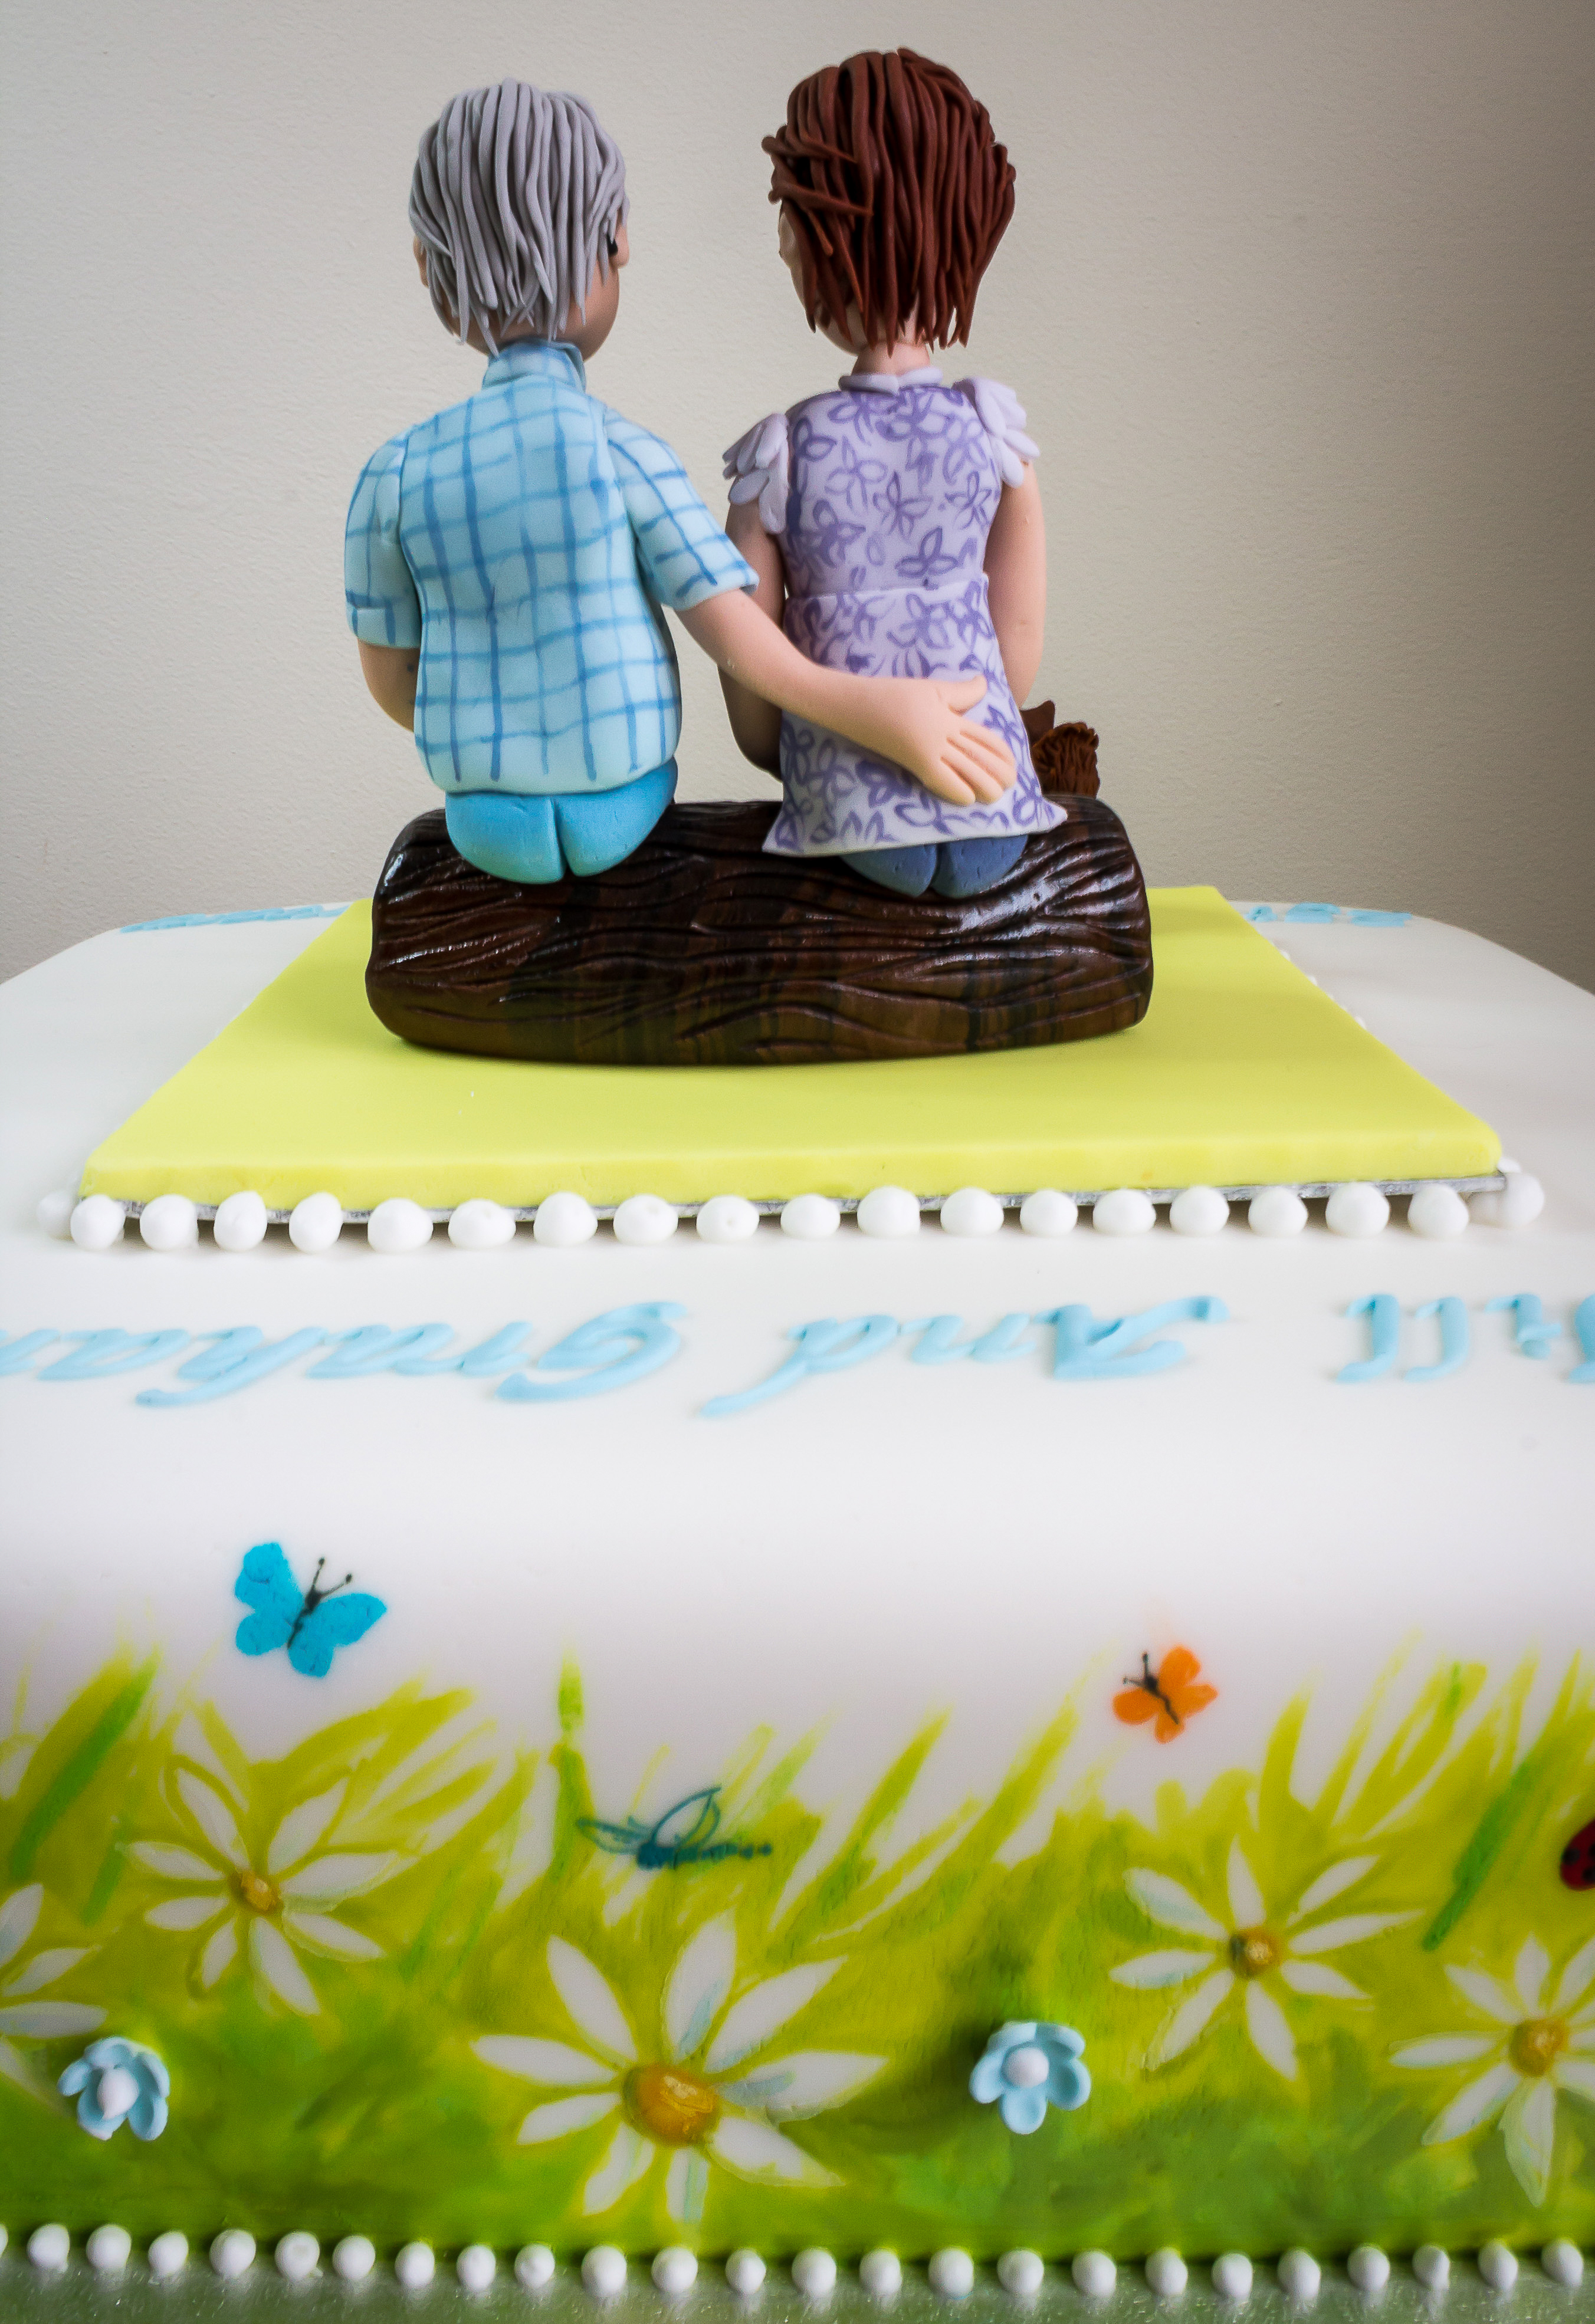 themilk: 5th Wedding Anniversary Cake Designs